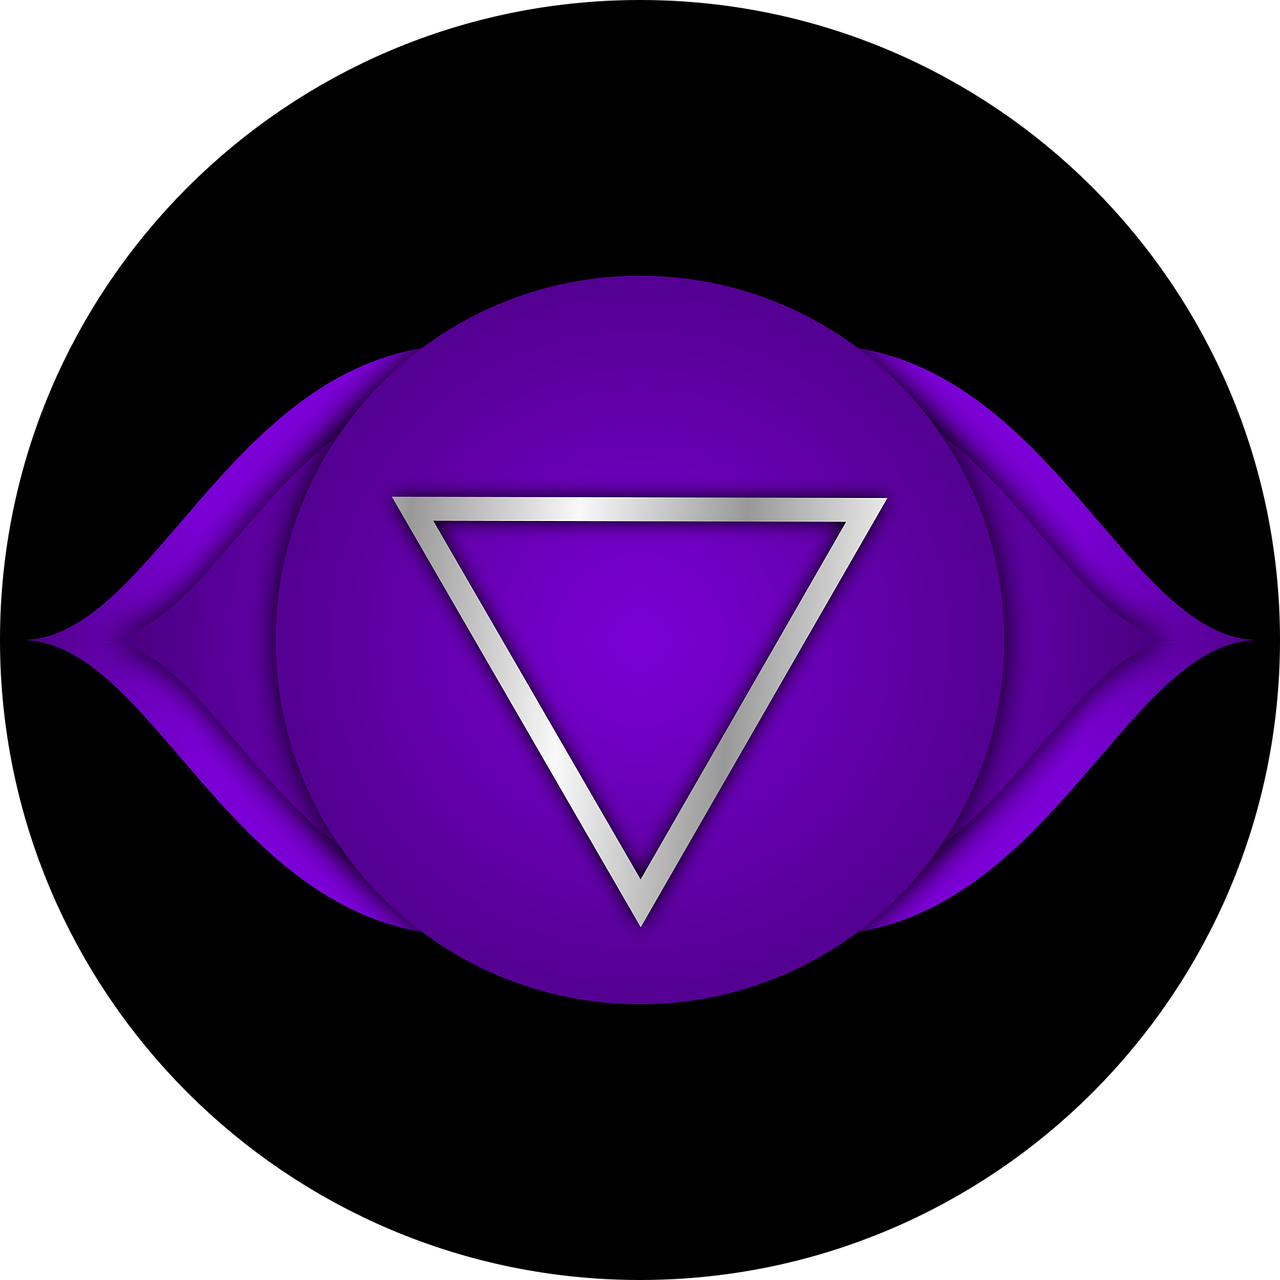 A purple symbol on a black background.